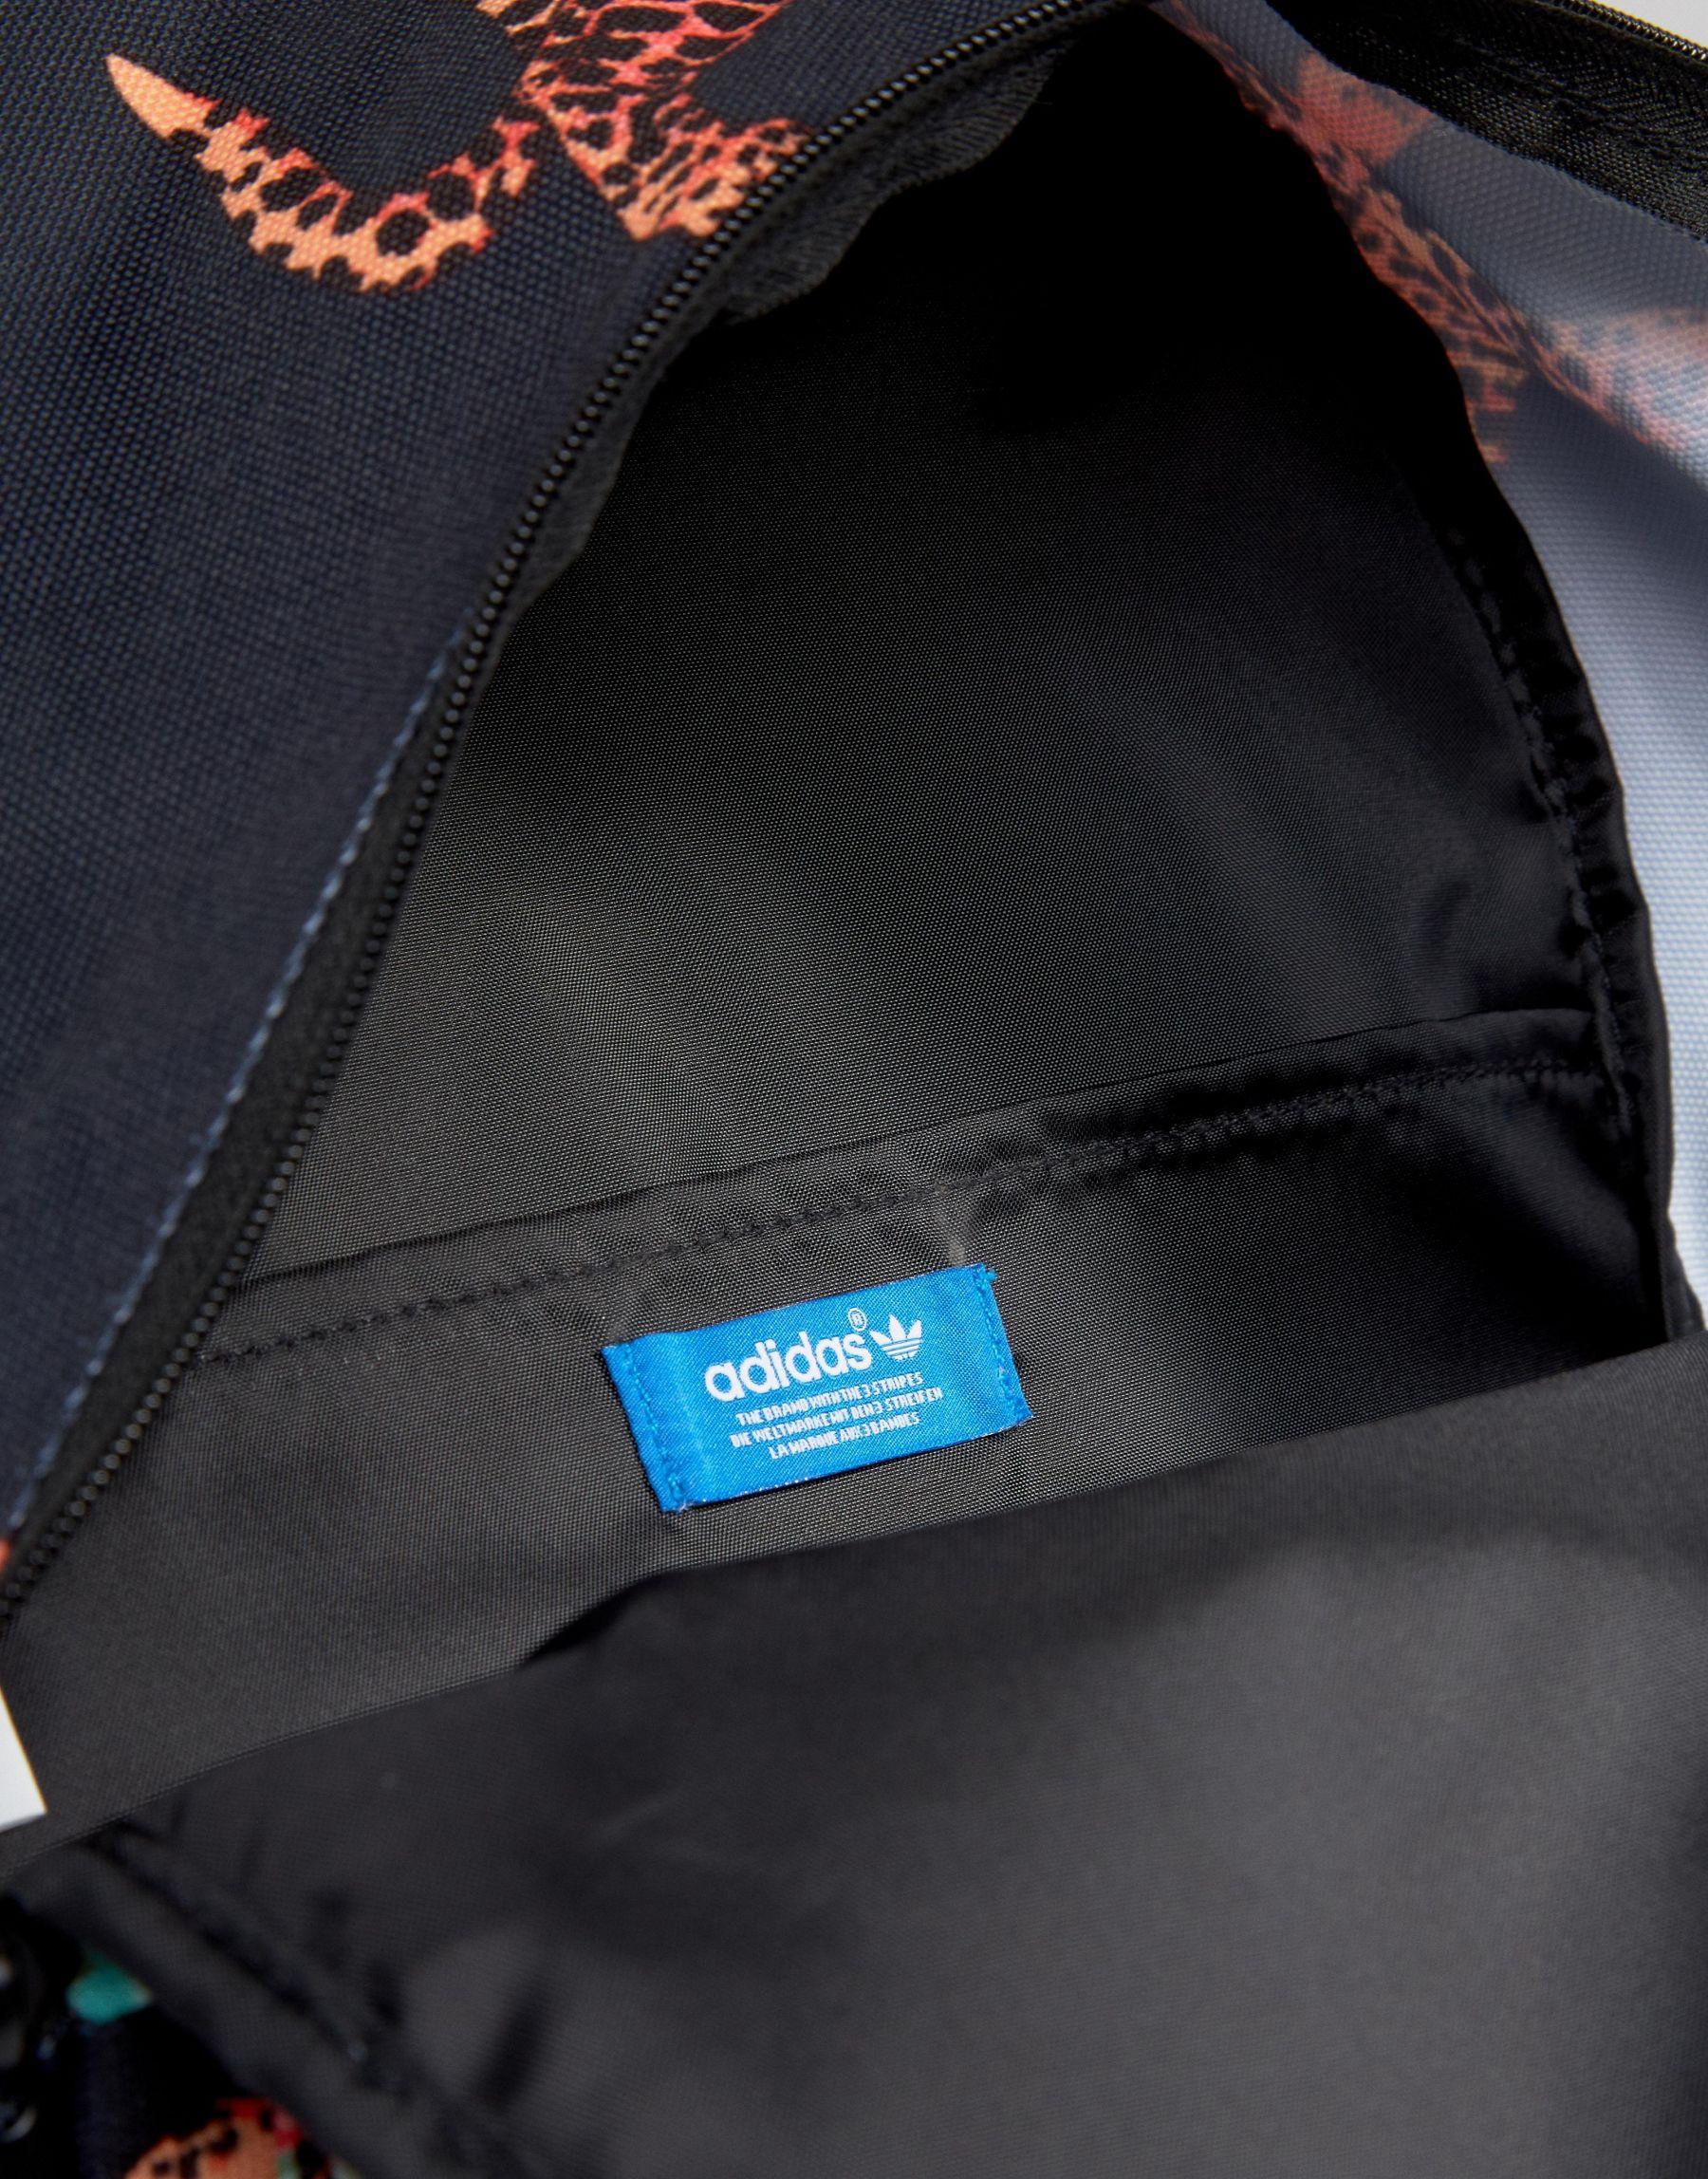 adidas Originals Canvas Leopard Print Backpack In Black Ay9359 for Men -  Lyst